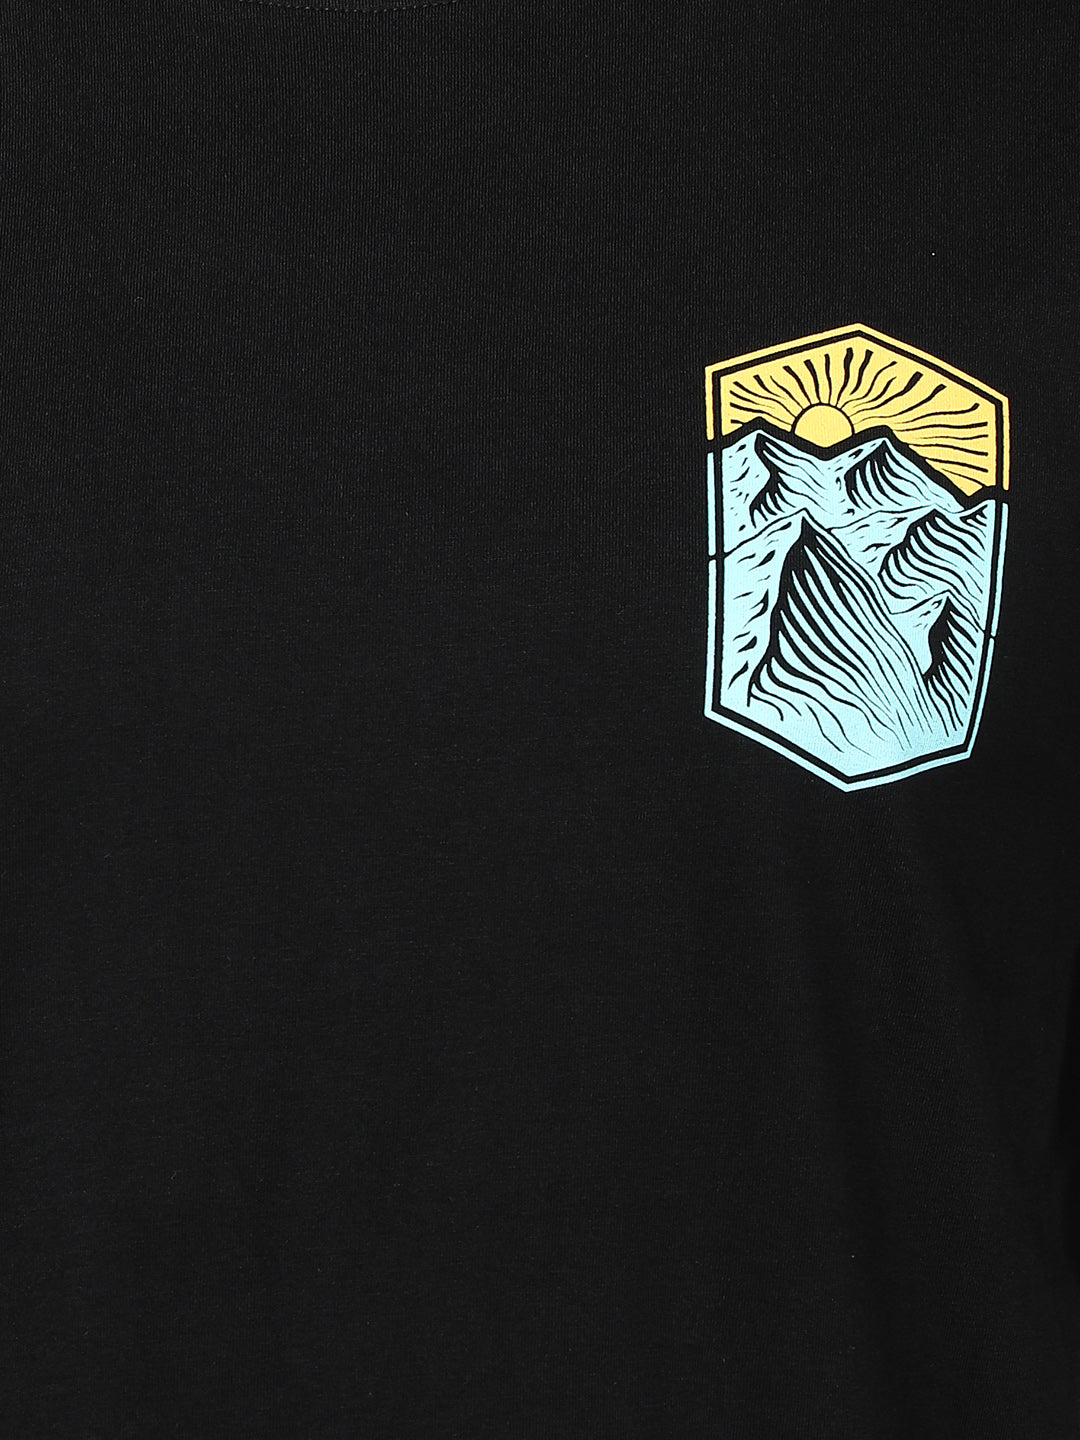 Dan Sunrise - Printed Men's Tshirt - Dark knight Black